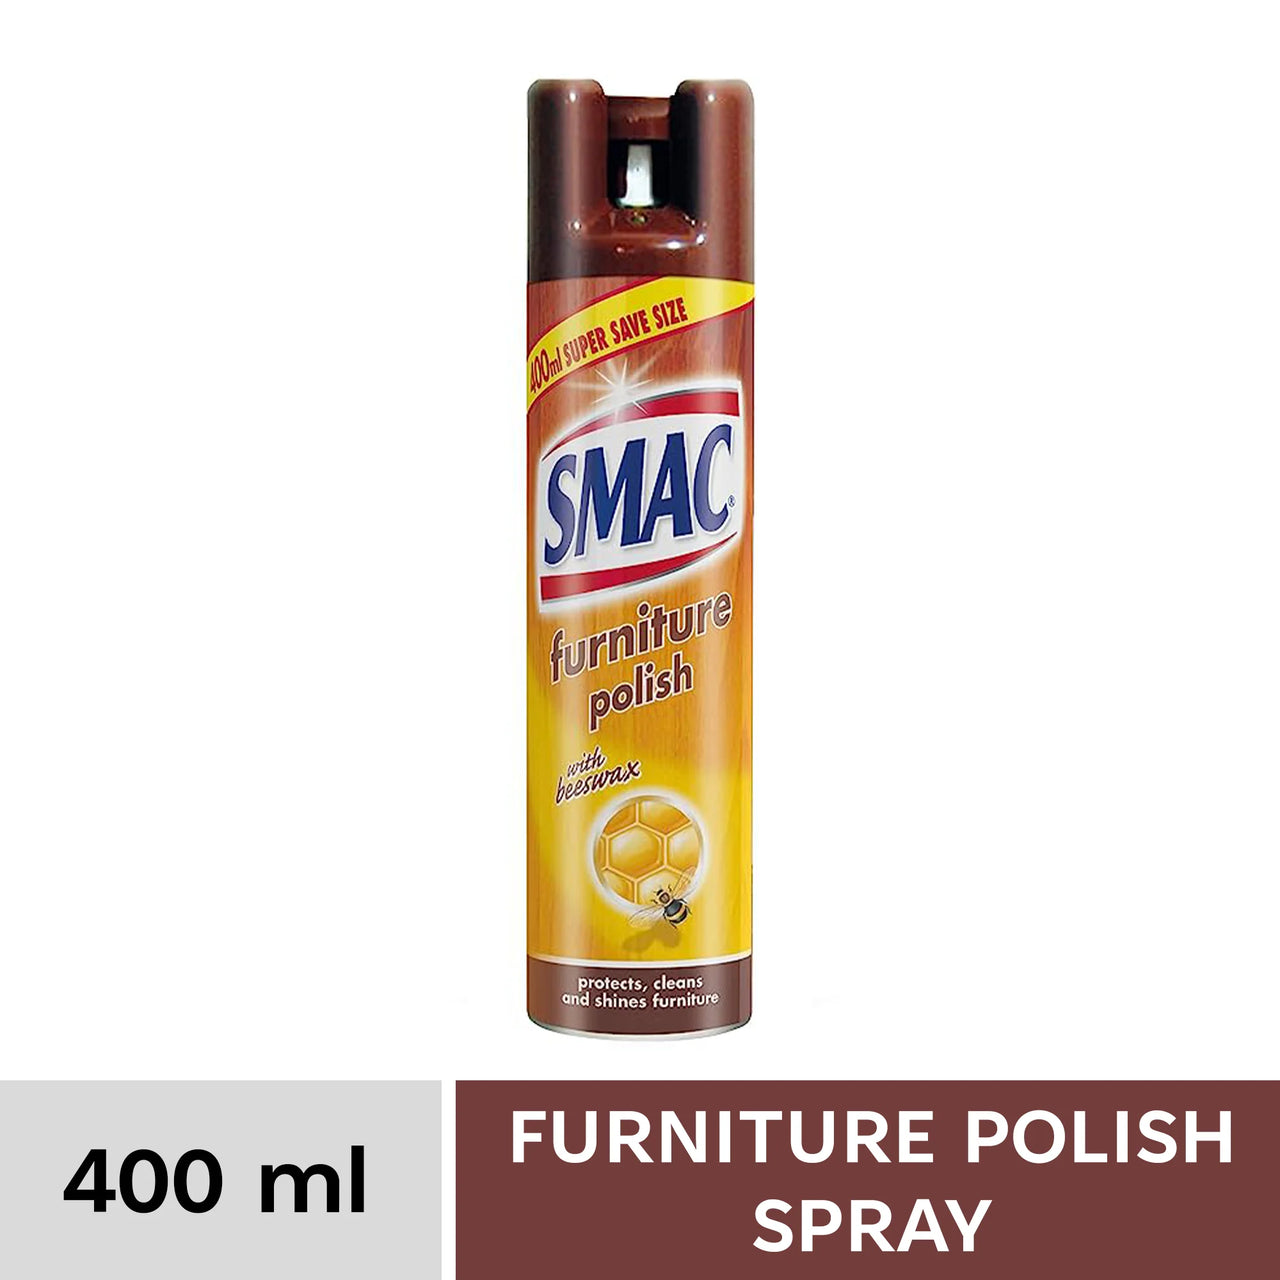 SMAC-Furniture Polish Spray-400ml